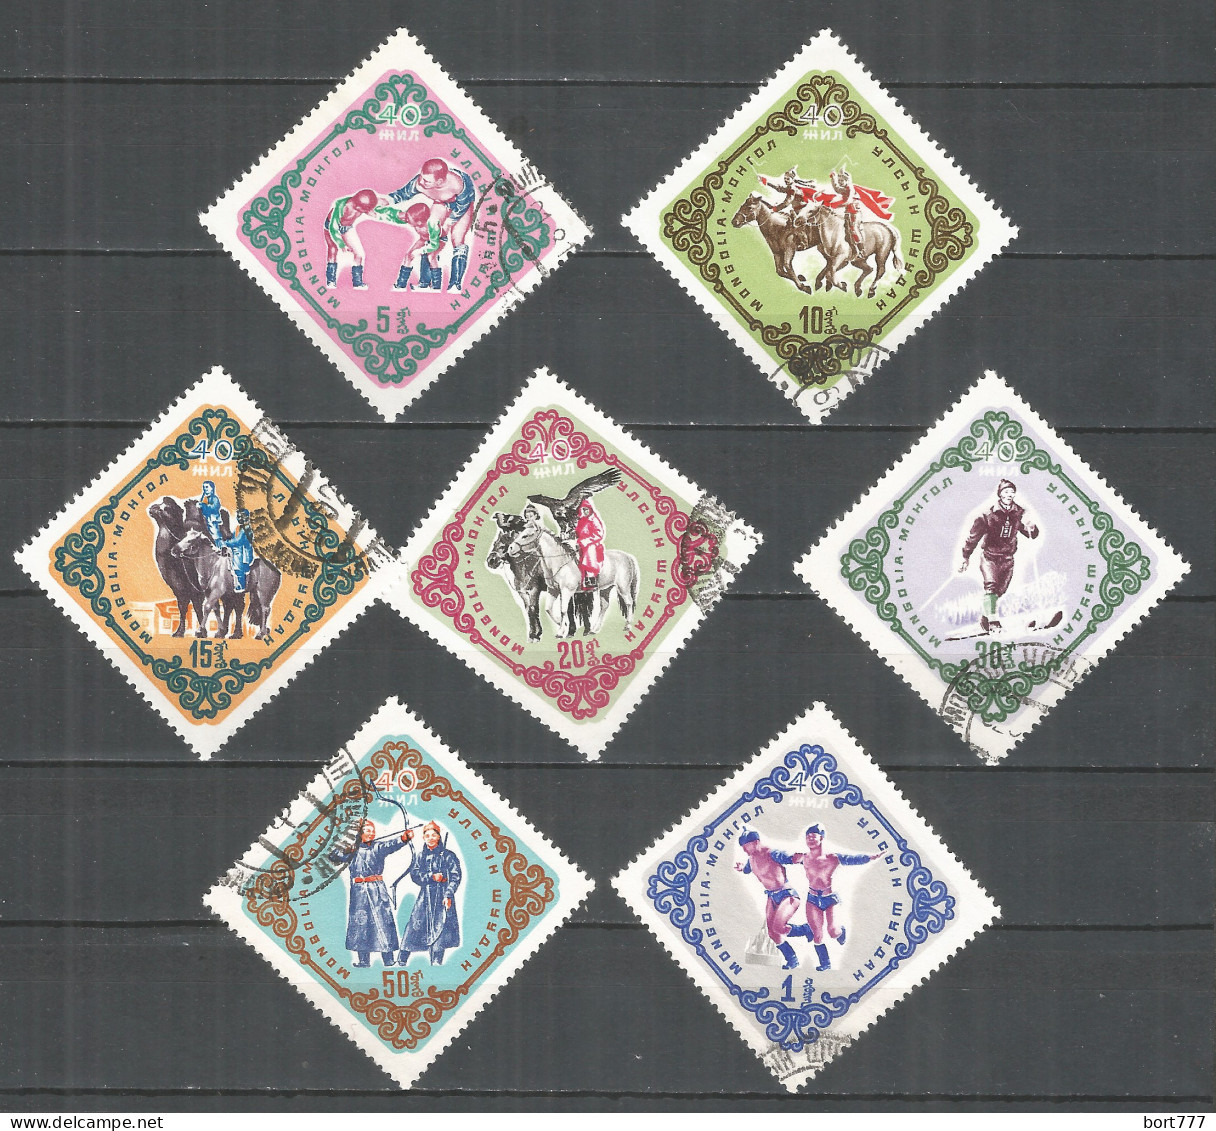 Mongolia 1961 Used Stamps CTO Set - Mongolia